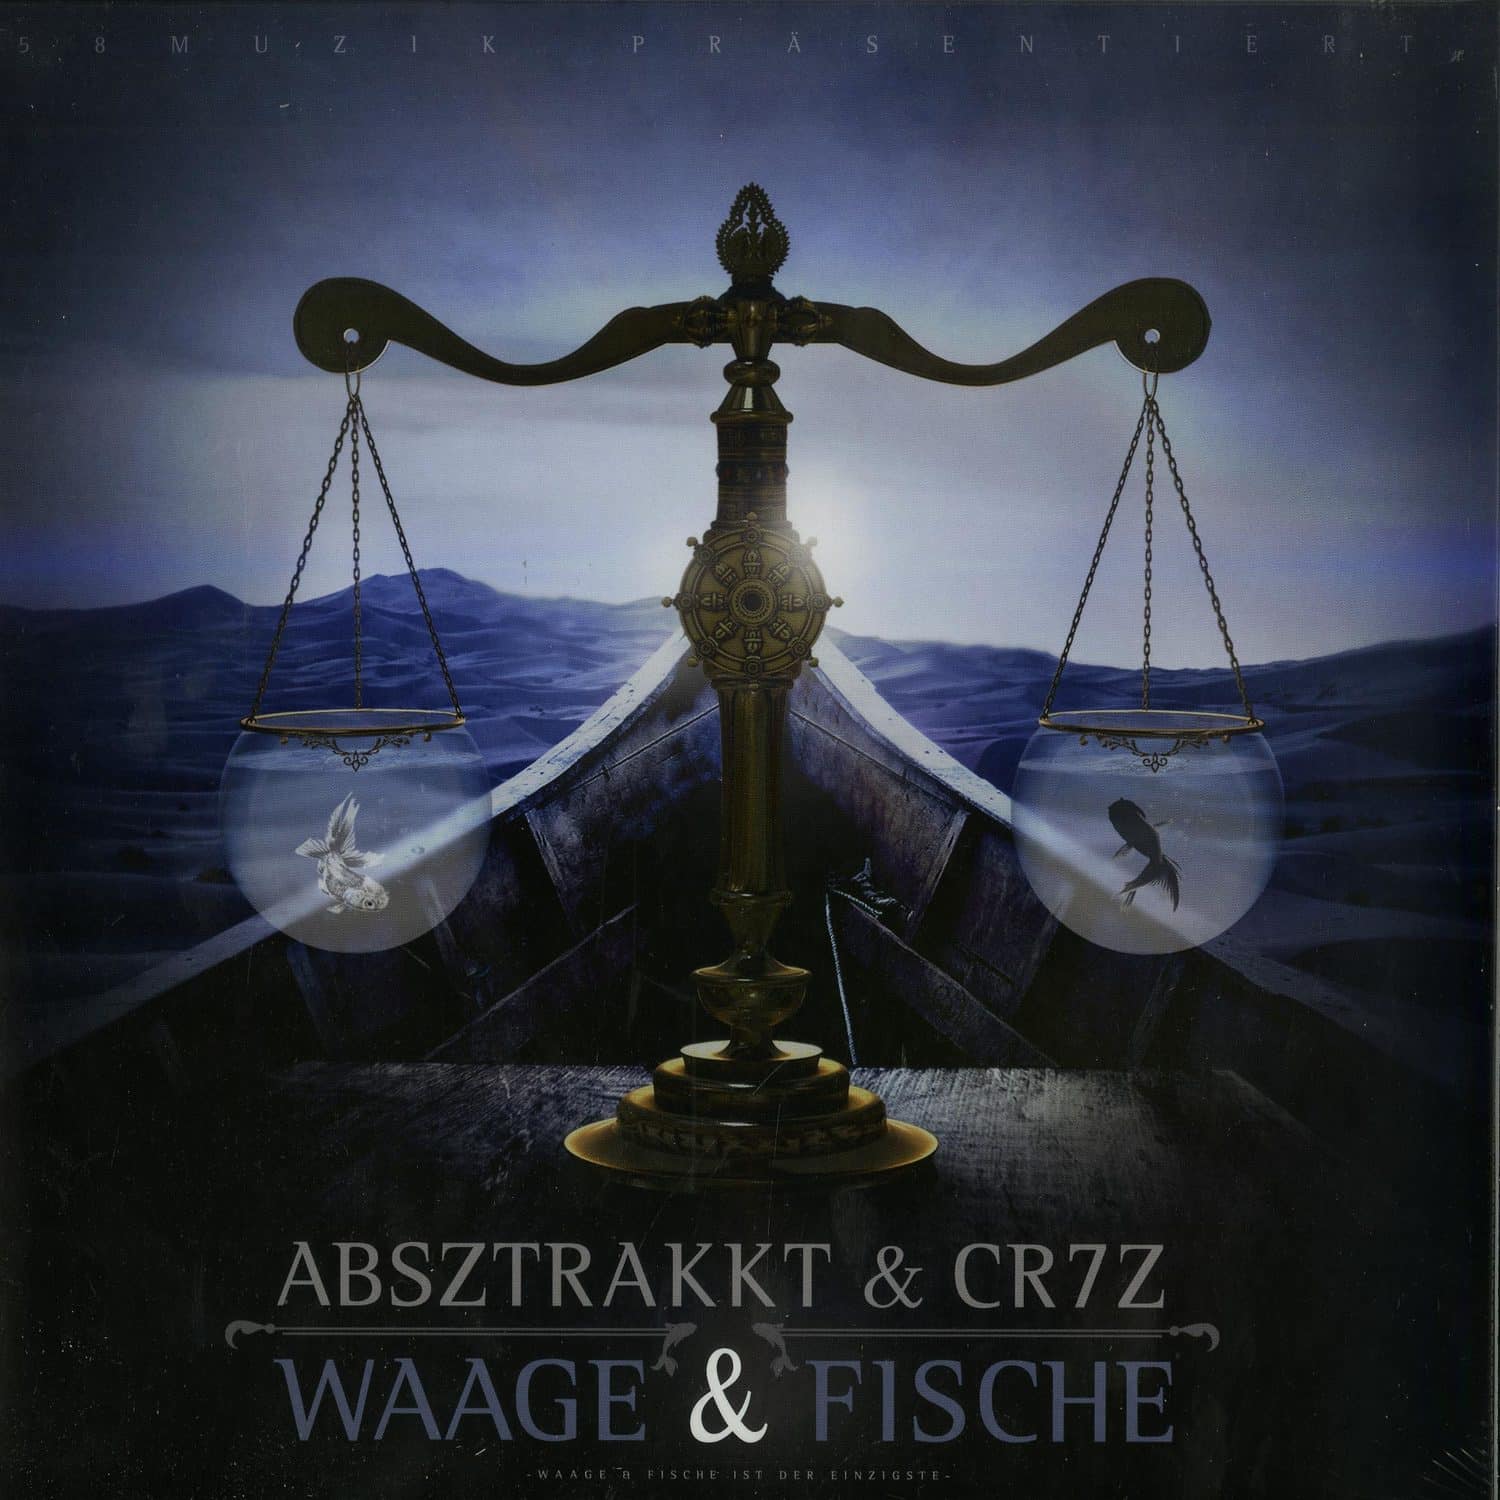 Absztrakkt & Cr7z - WAAGE & FISCHE 